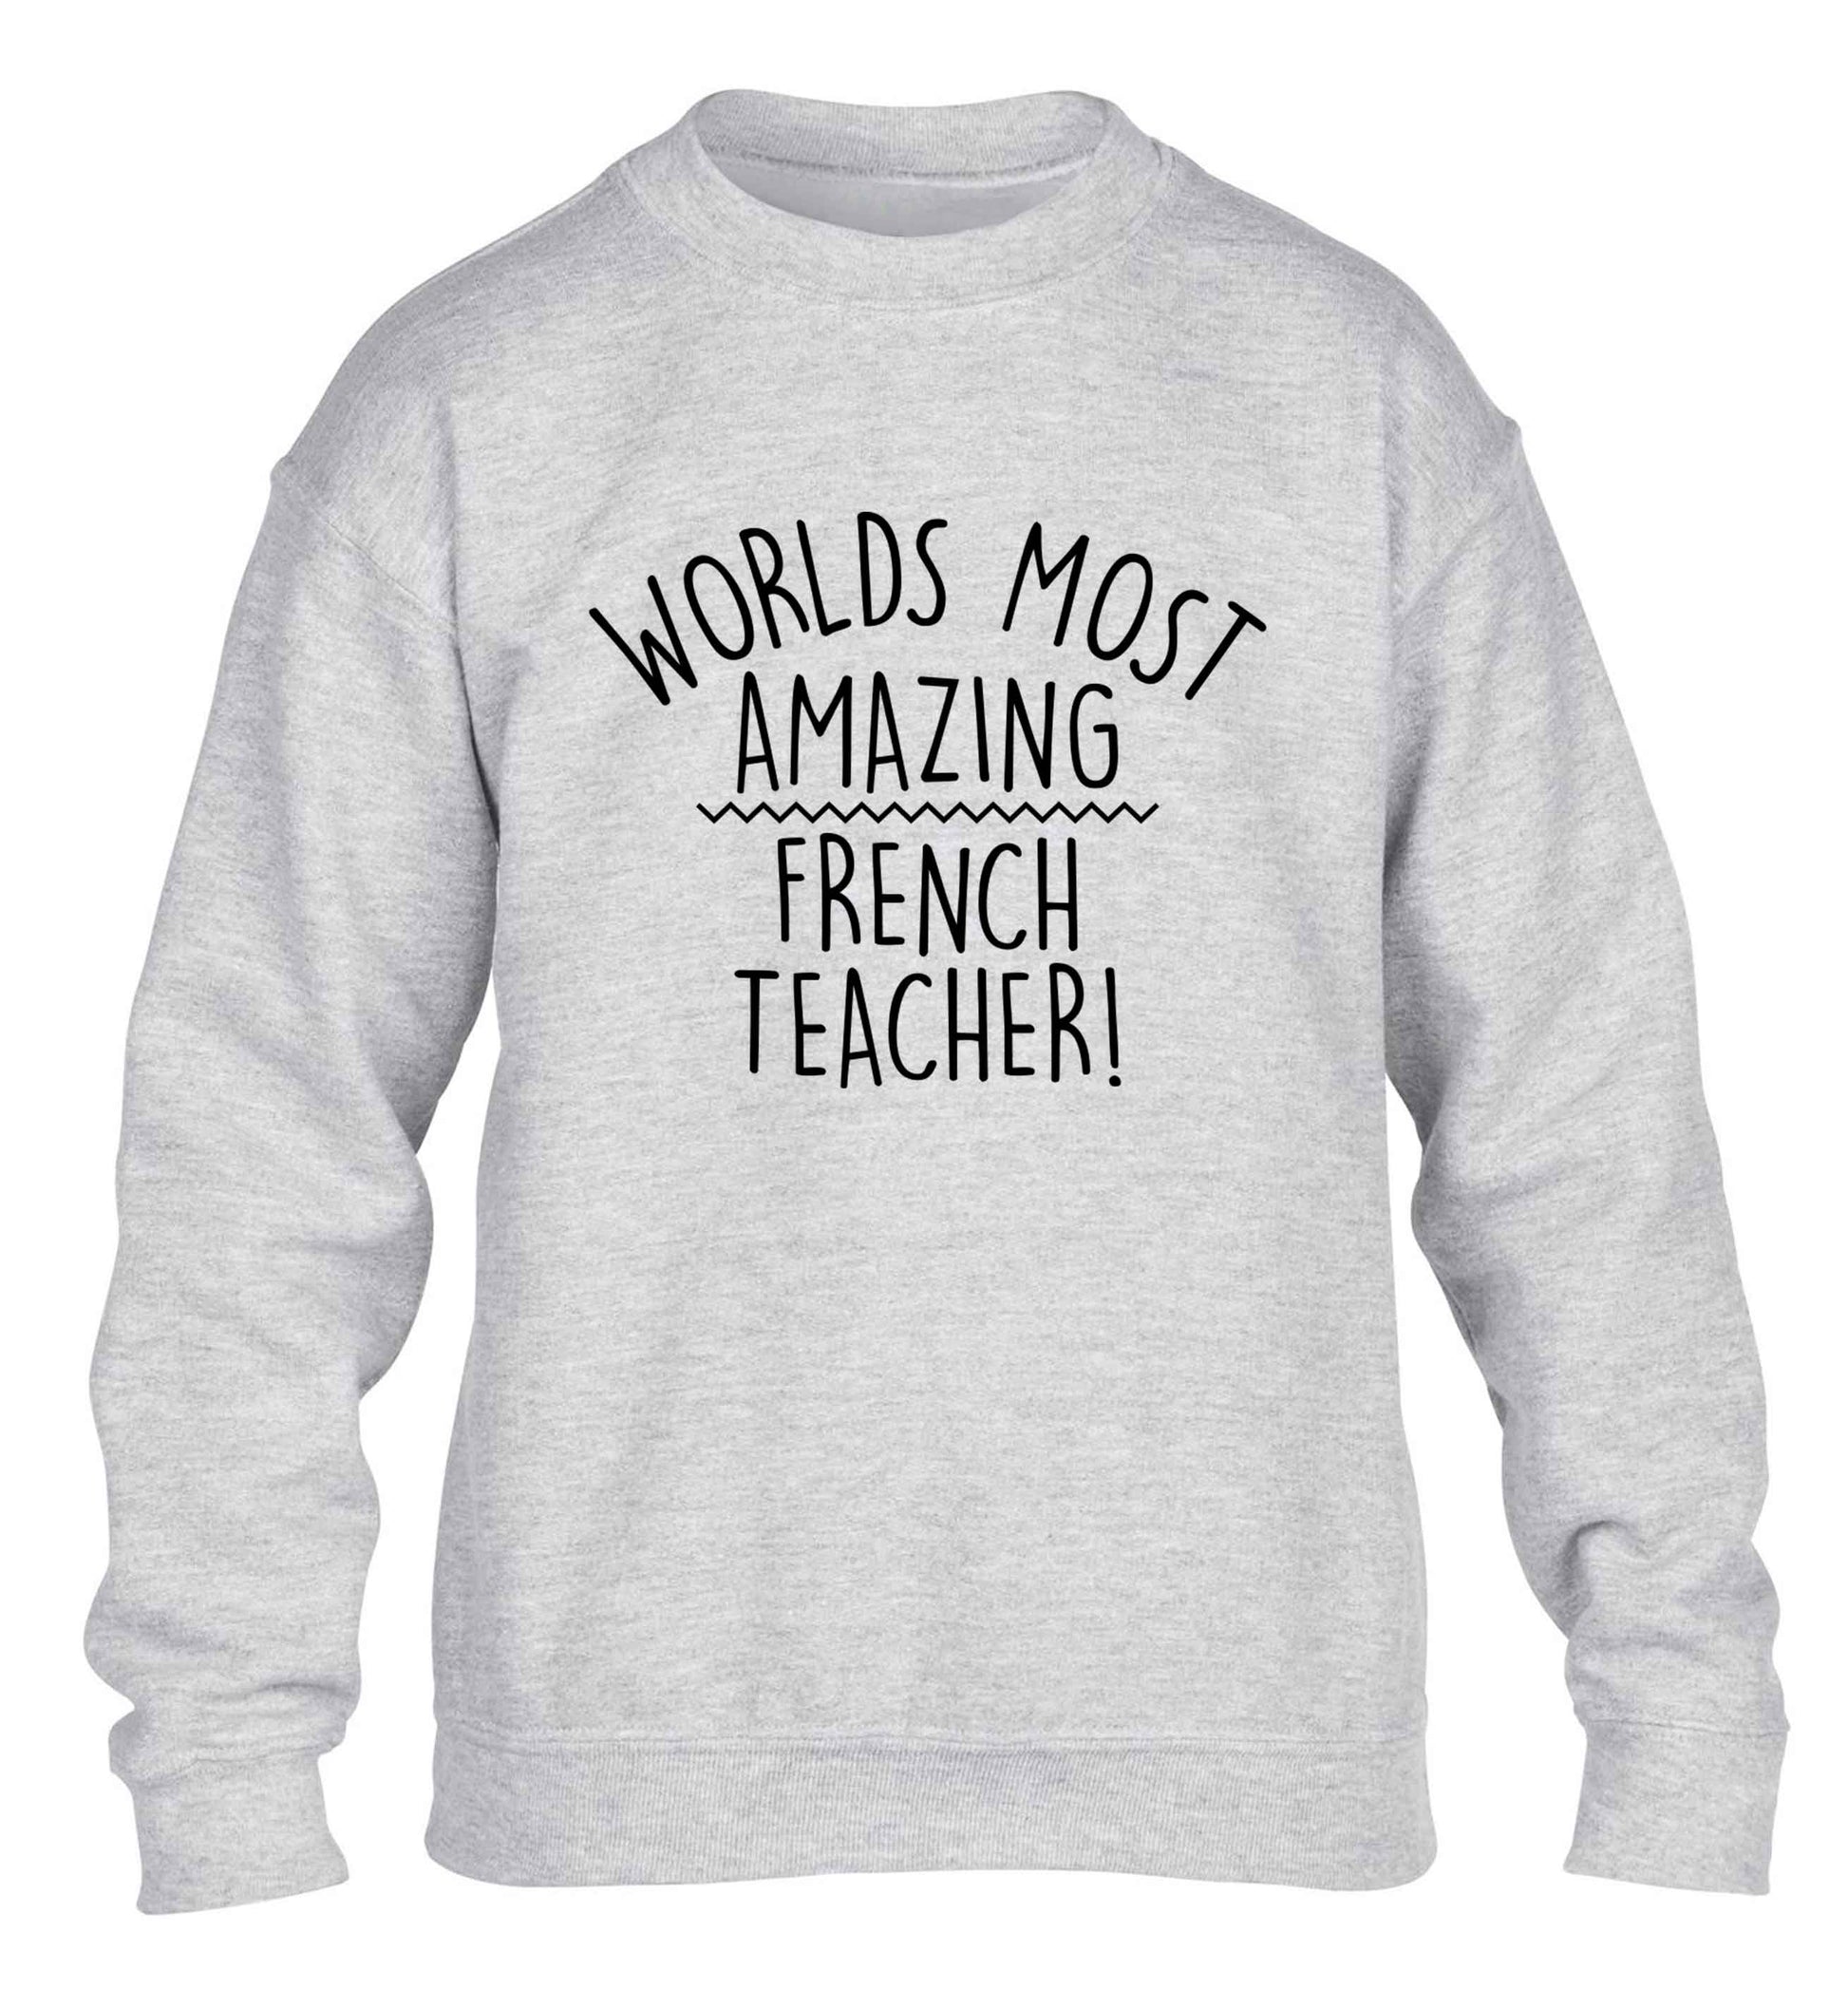 Worlds most amazing French teacher children's grey sweater 12-13 Years